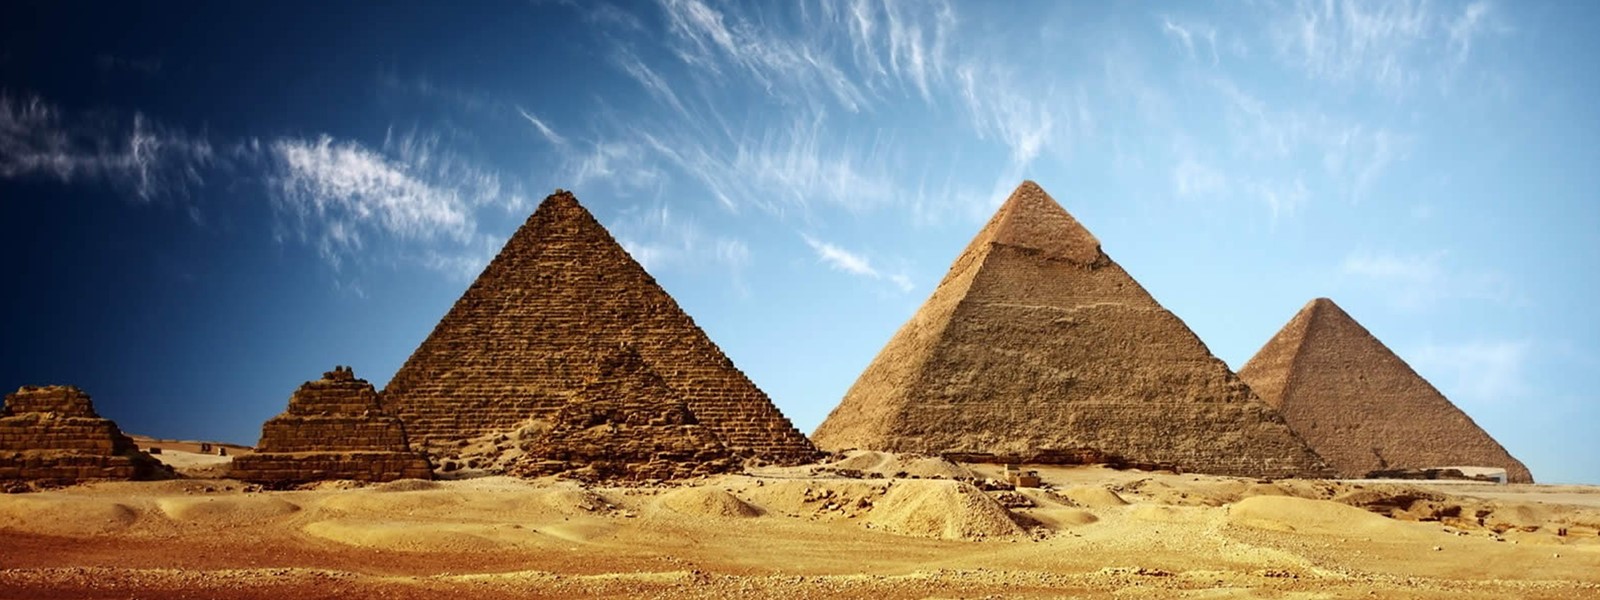 Geotours Pyramids Egypt_f3f2f_lg.jpg Banner